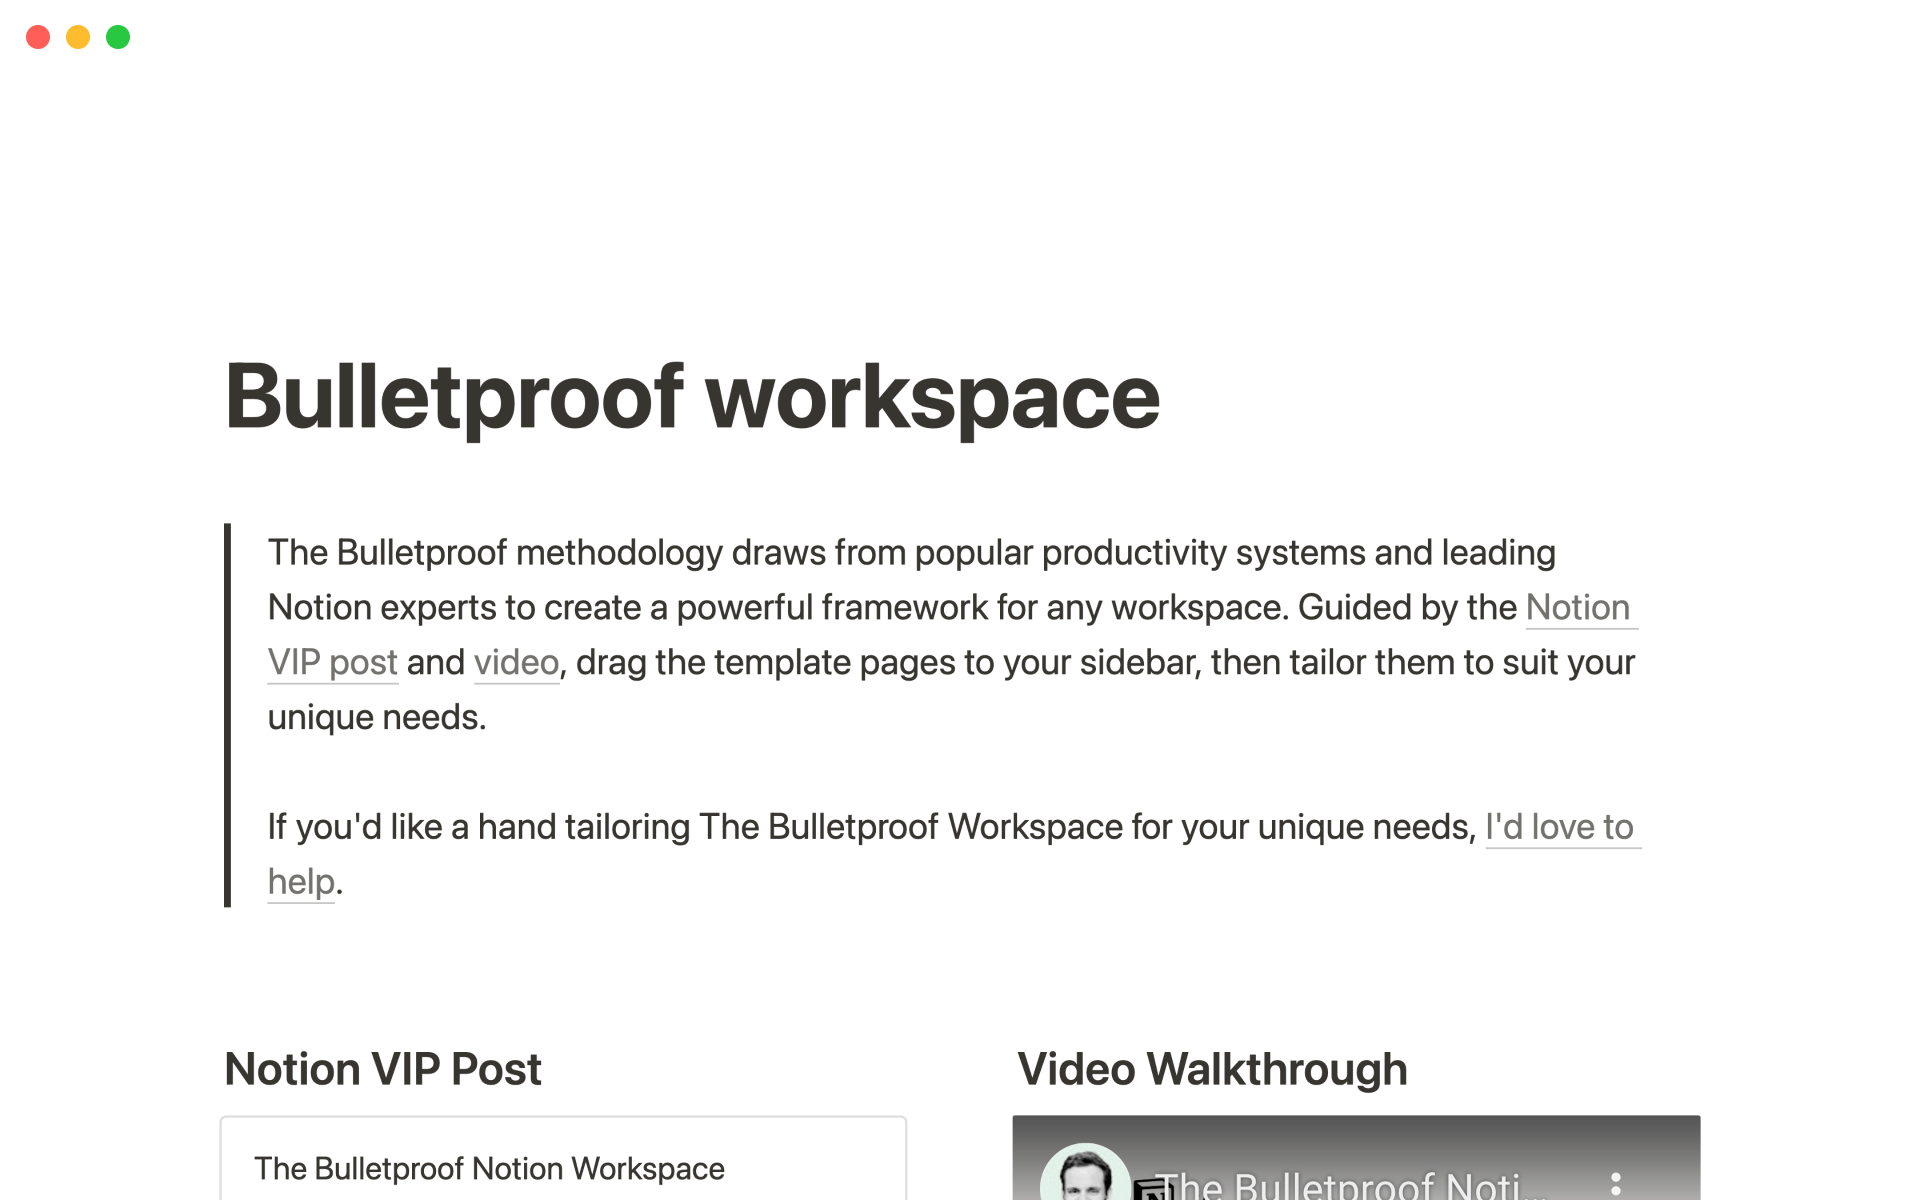 The desktop image for the Bulletproof workspace template